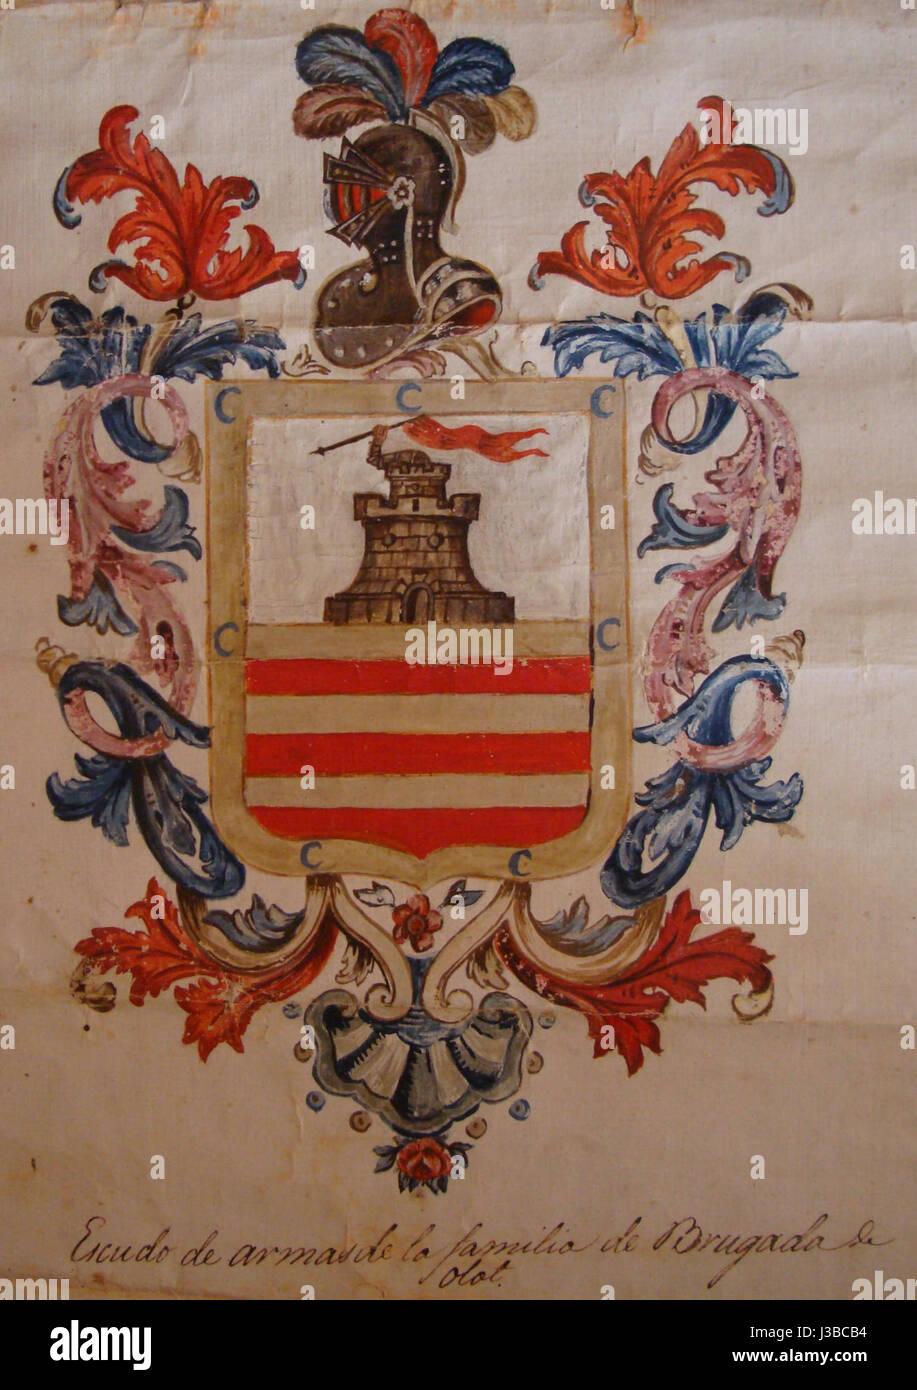 Escudo de Armas de la familia Brugada de Olot, detalle Stock Photo